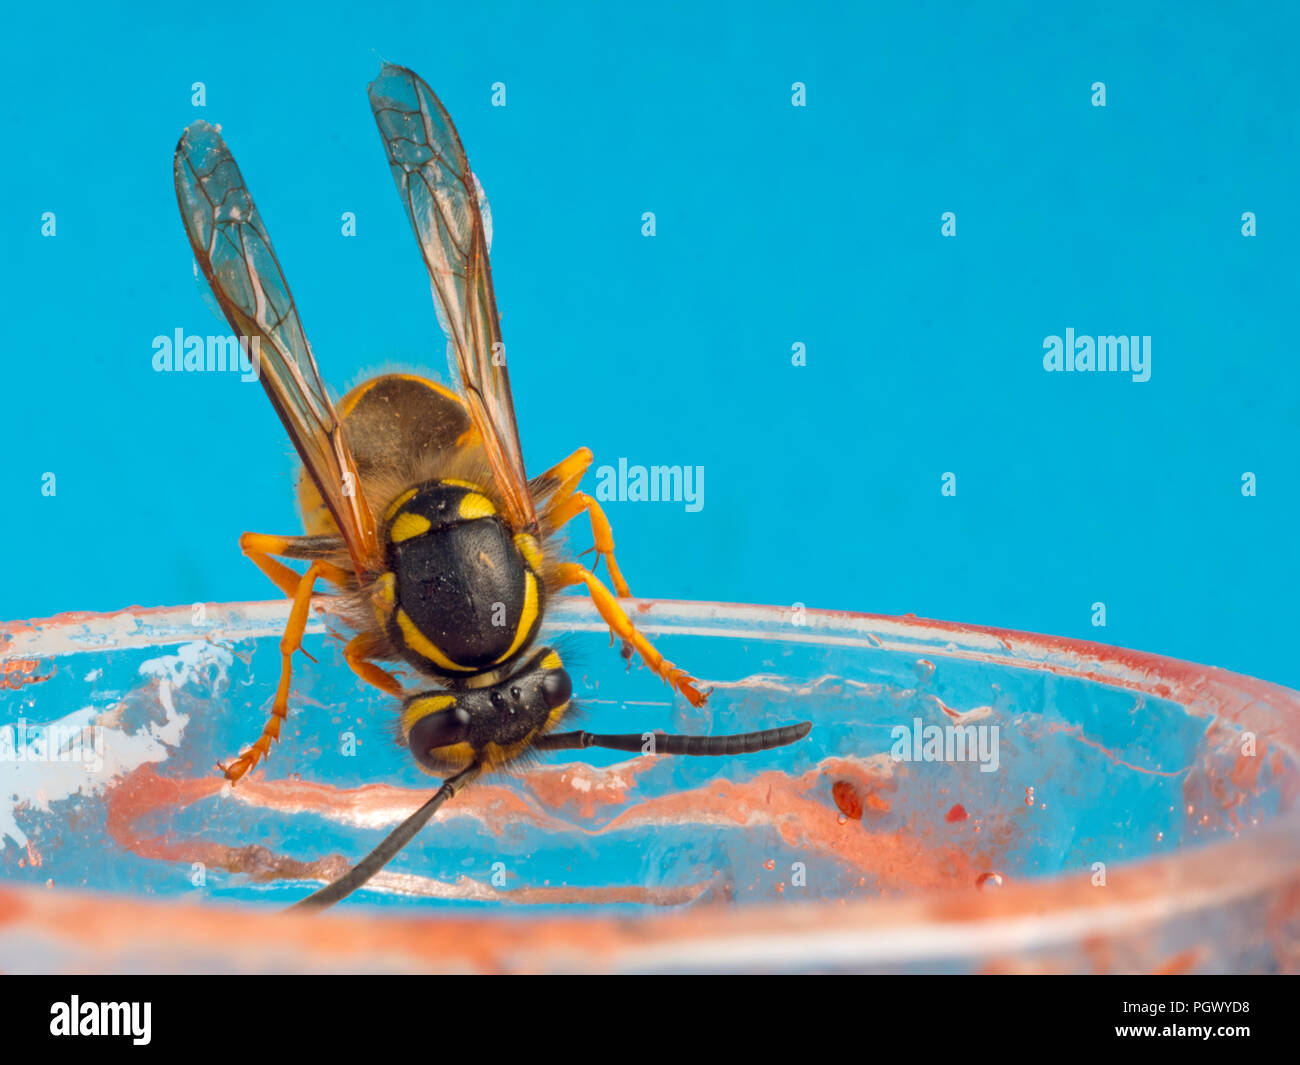 Common Wasp Vespula vulgaris feeding on raspberry jam Stock Photo